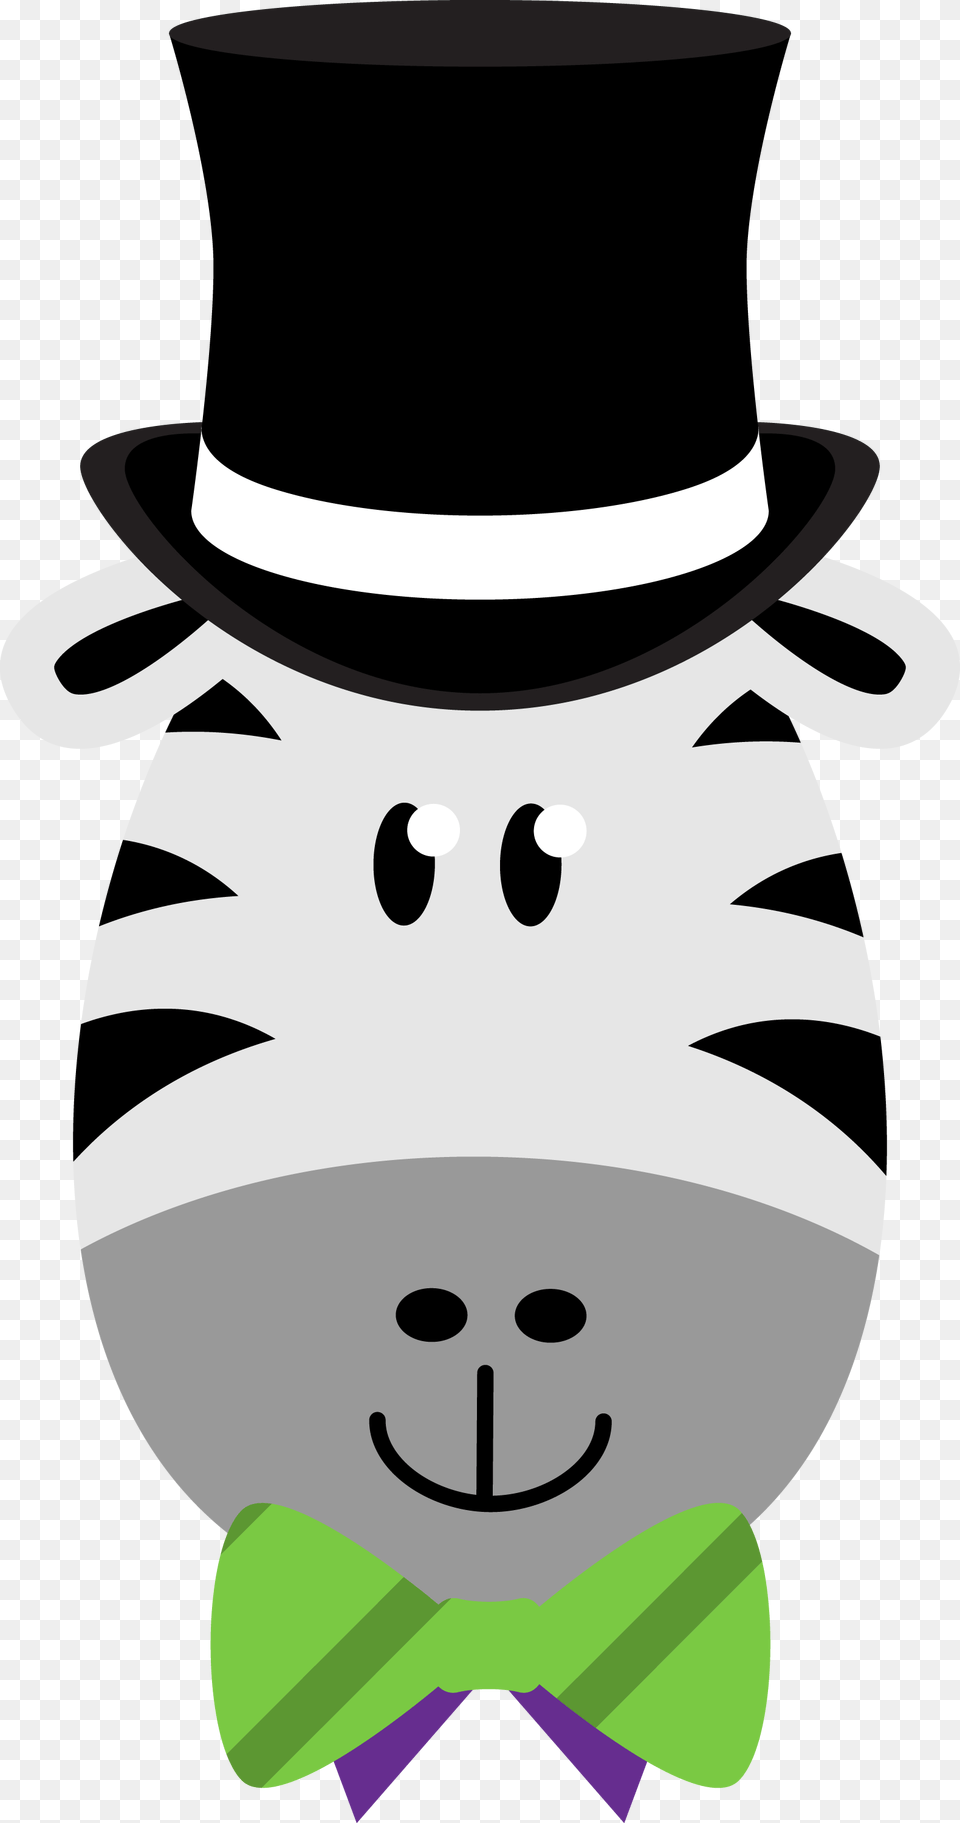 Gorilla Lion Zebra Tiger Cartoon, Accessories, Formal Wear, Jar, Tie Free Png